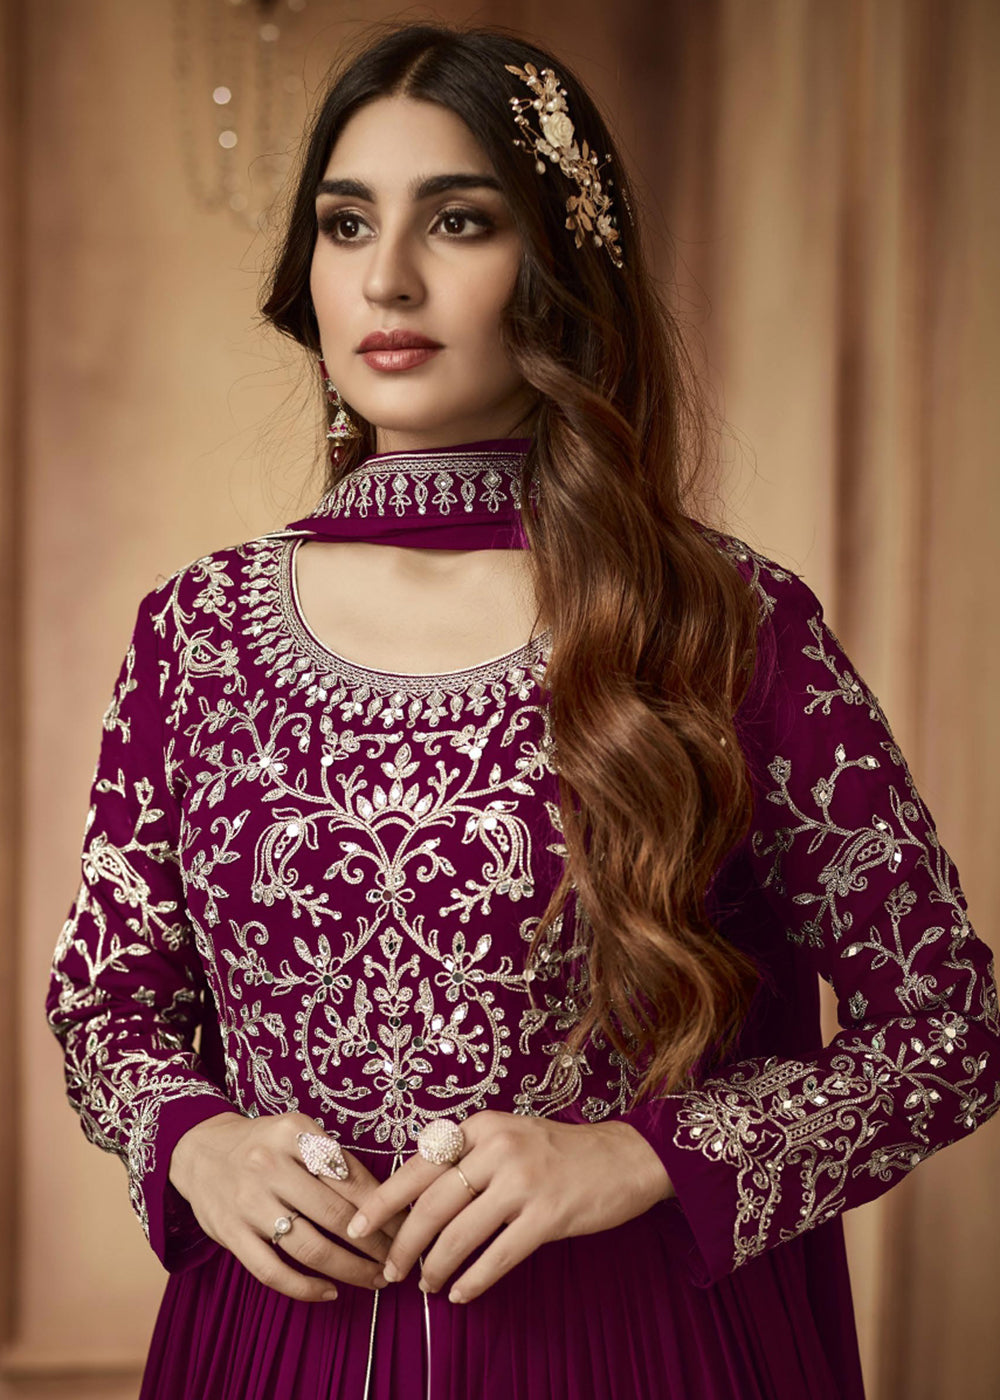 Buy Now Attractive Magenta Wine Sequins Wedding Festive Anarkali Suit Online in USA, UK, Australia, New Zealand, Canada & Worldwide at Empress Clothing.